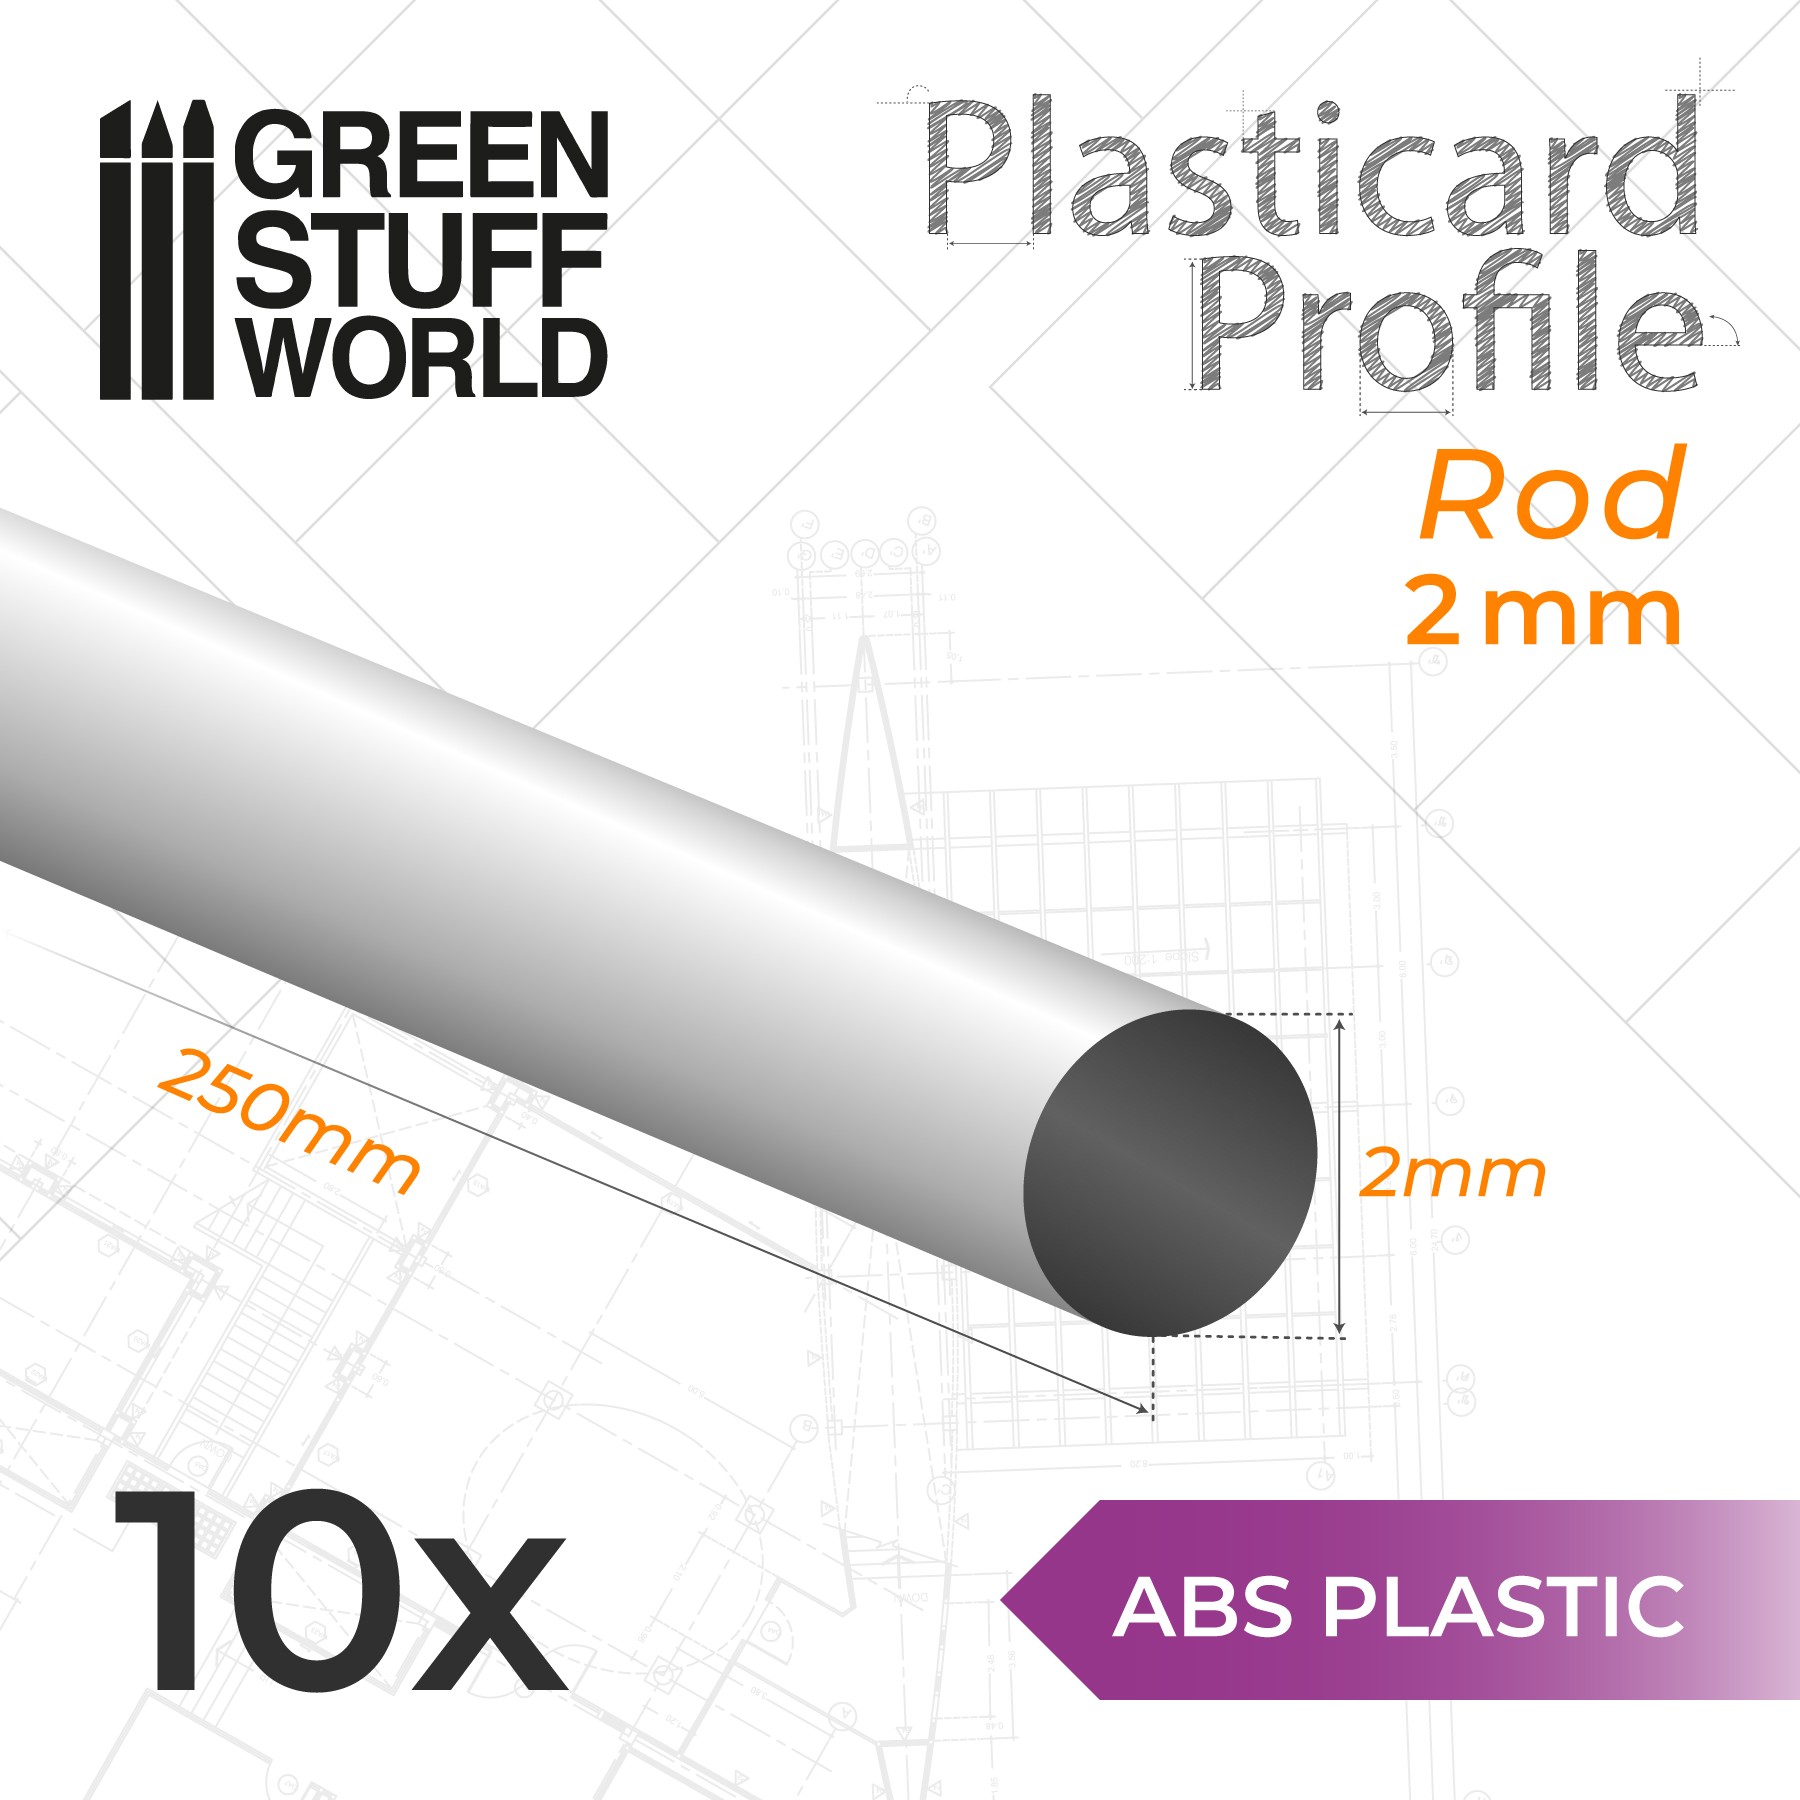 Wws ABS 10 x rond 2 mm Rod Plasticard PLASTIKARD plastique ABS ABS9 